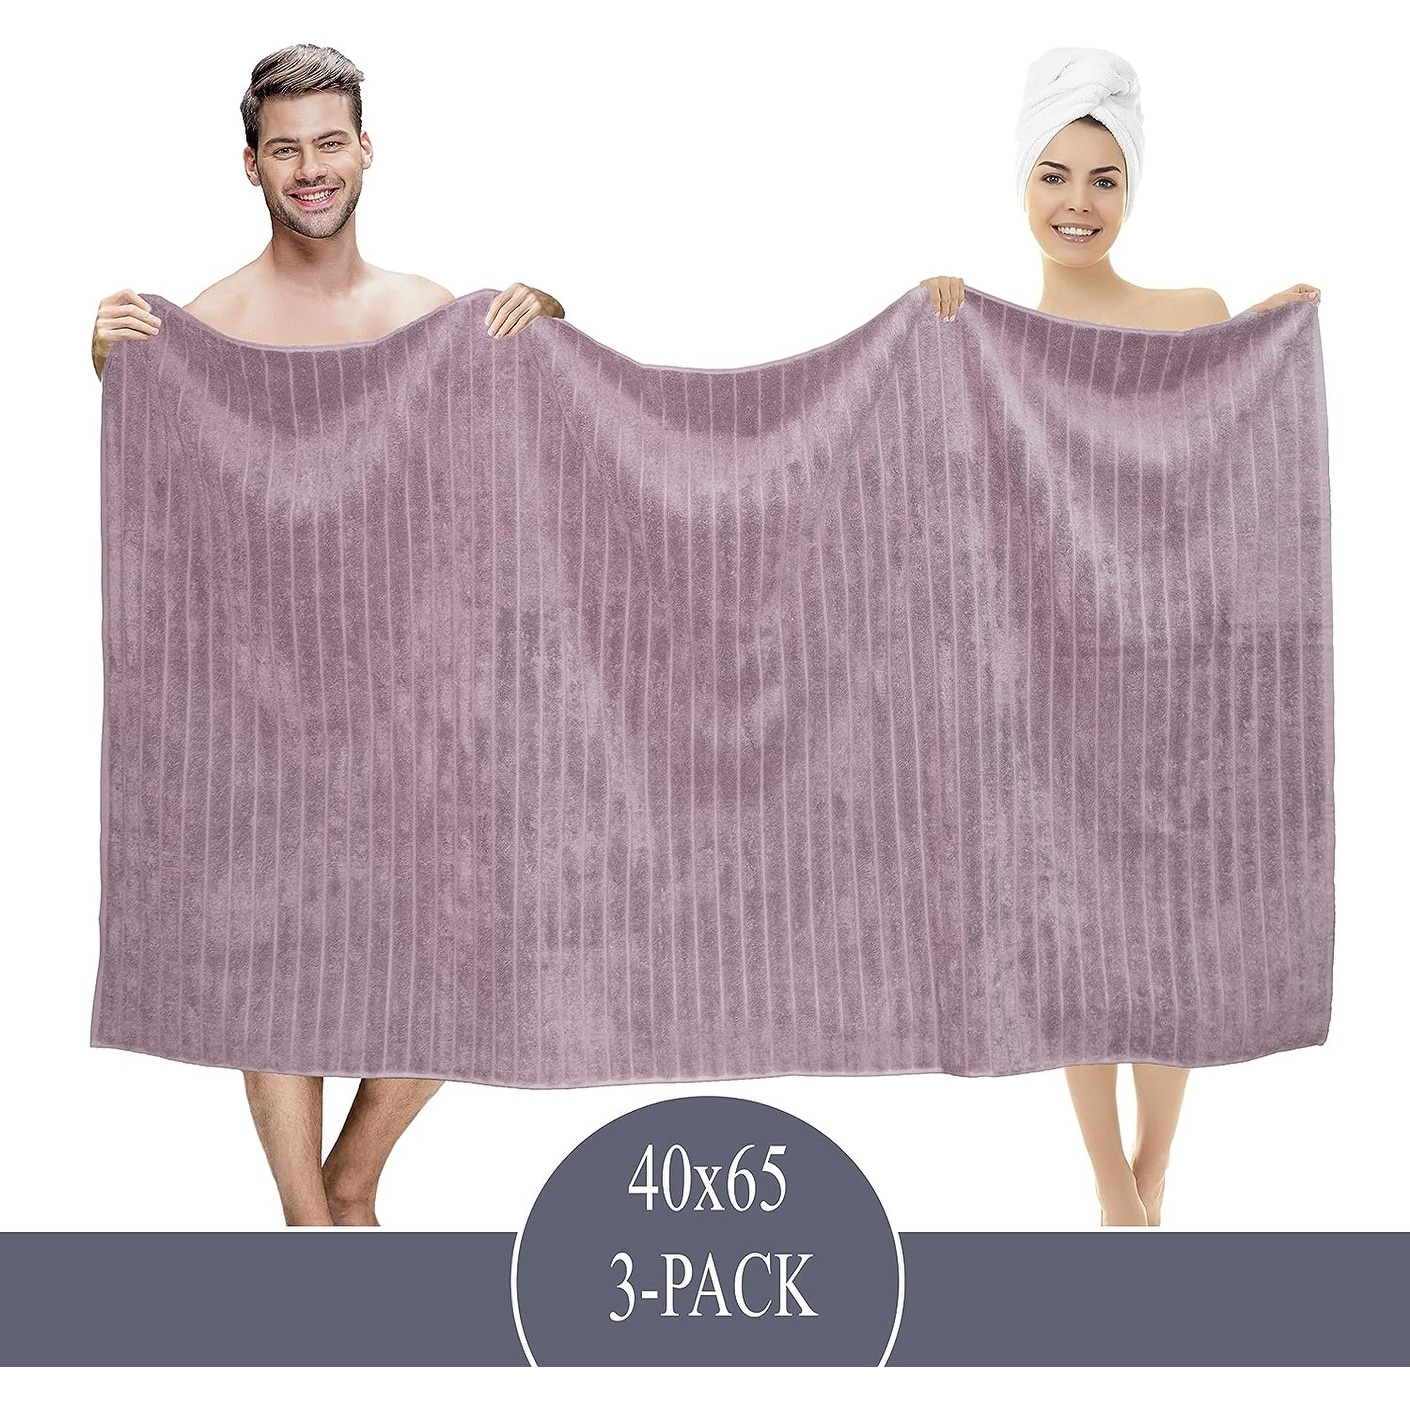 100% Turkish Cotton Ribbed 6 Piece Towel Set – Laytner's Linen & Home